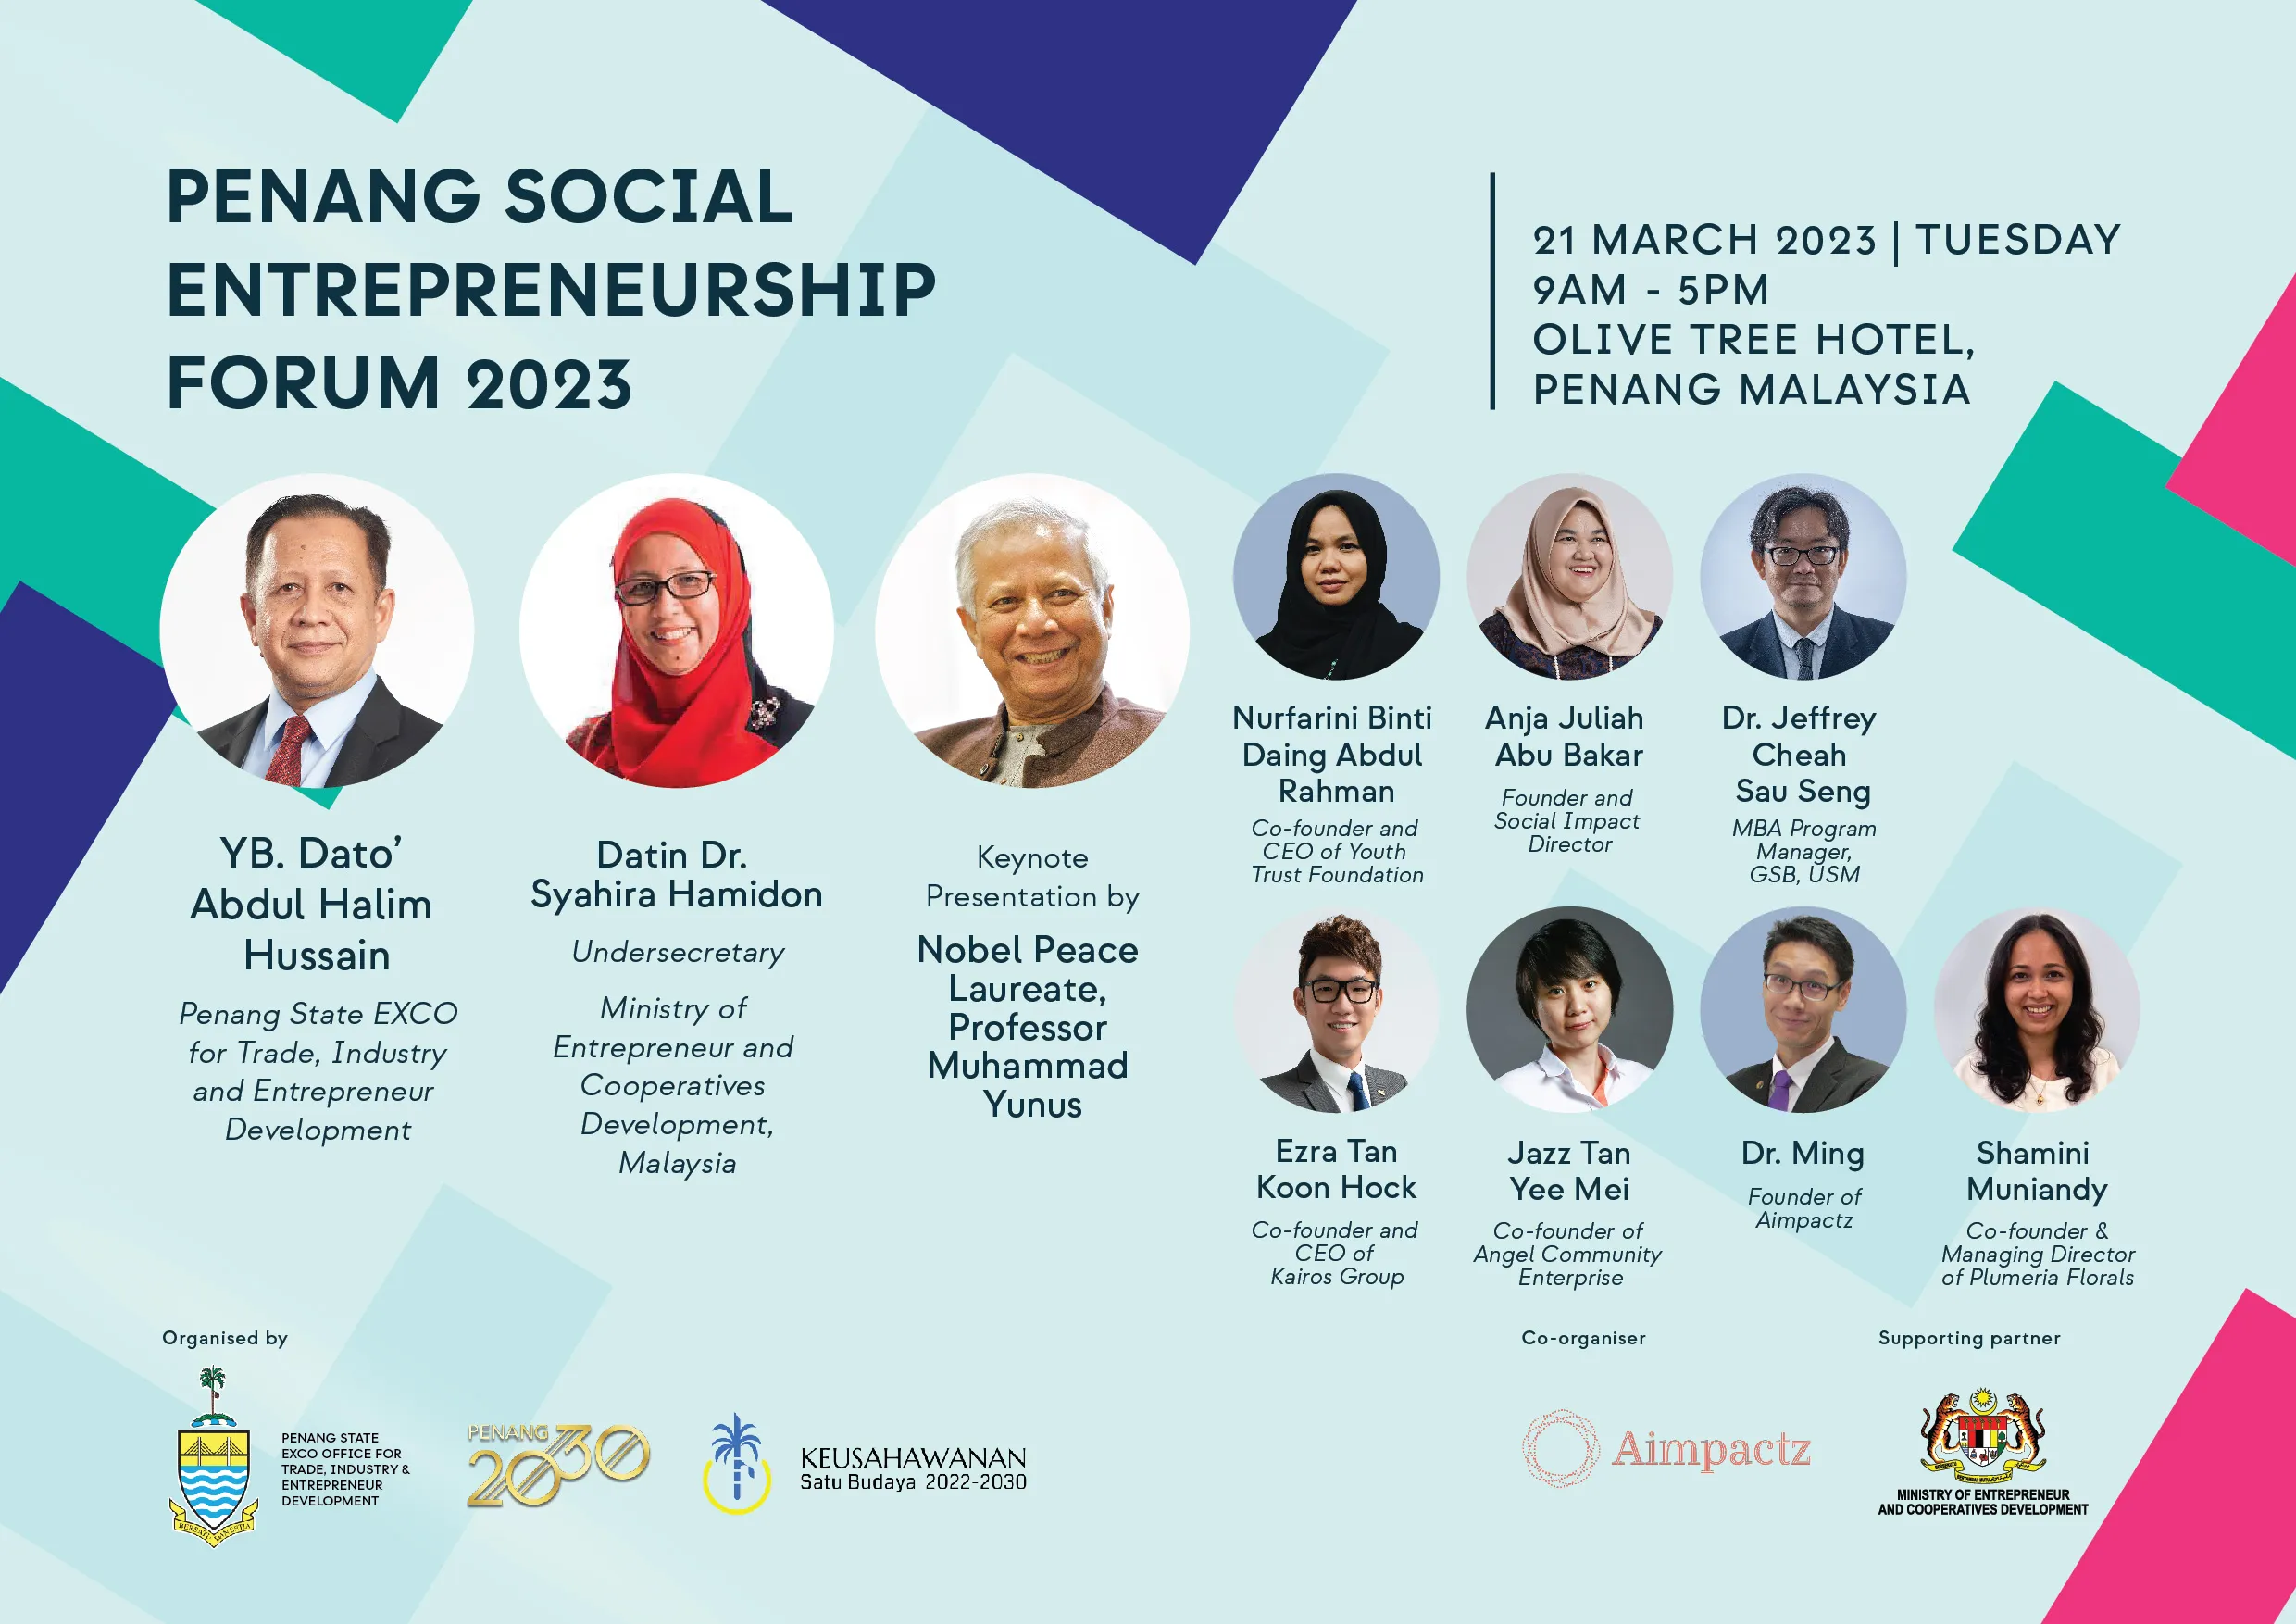 Penang Social Entrepeneurship Forum 2023 (PSEF '23)